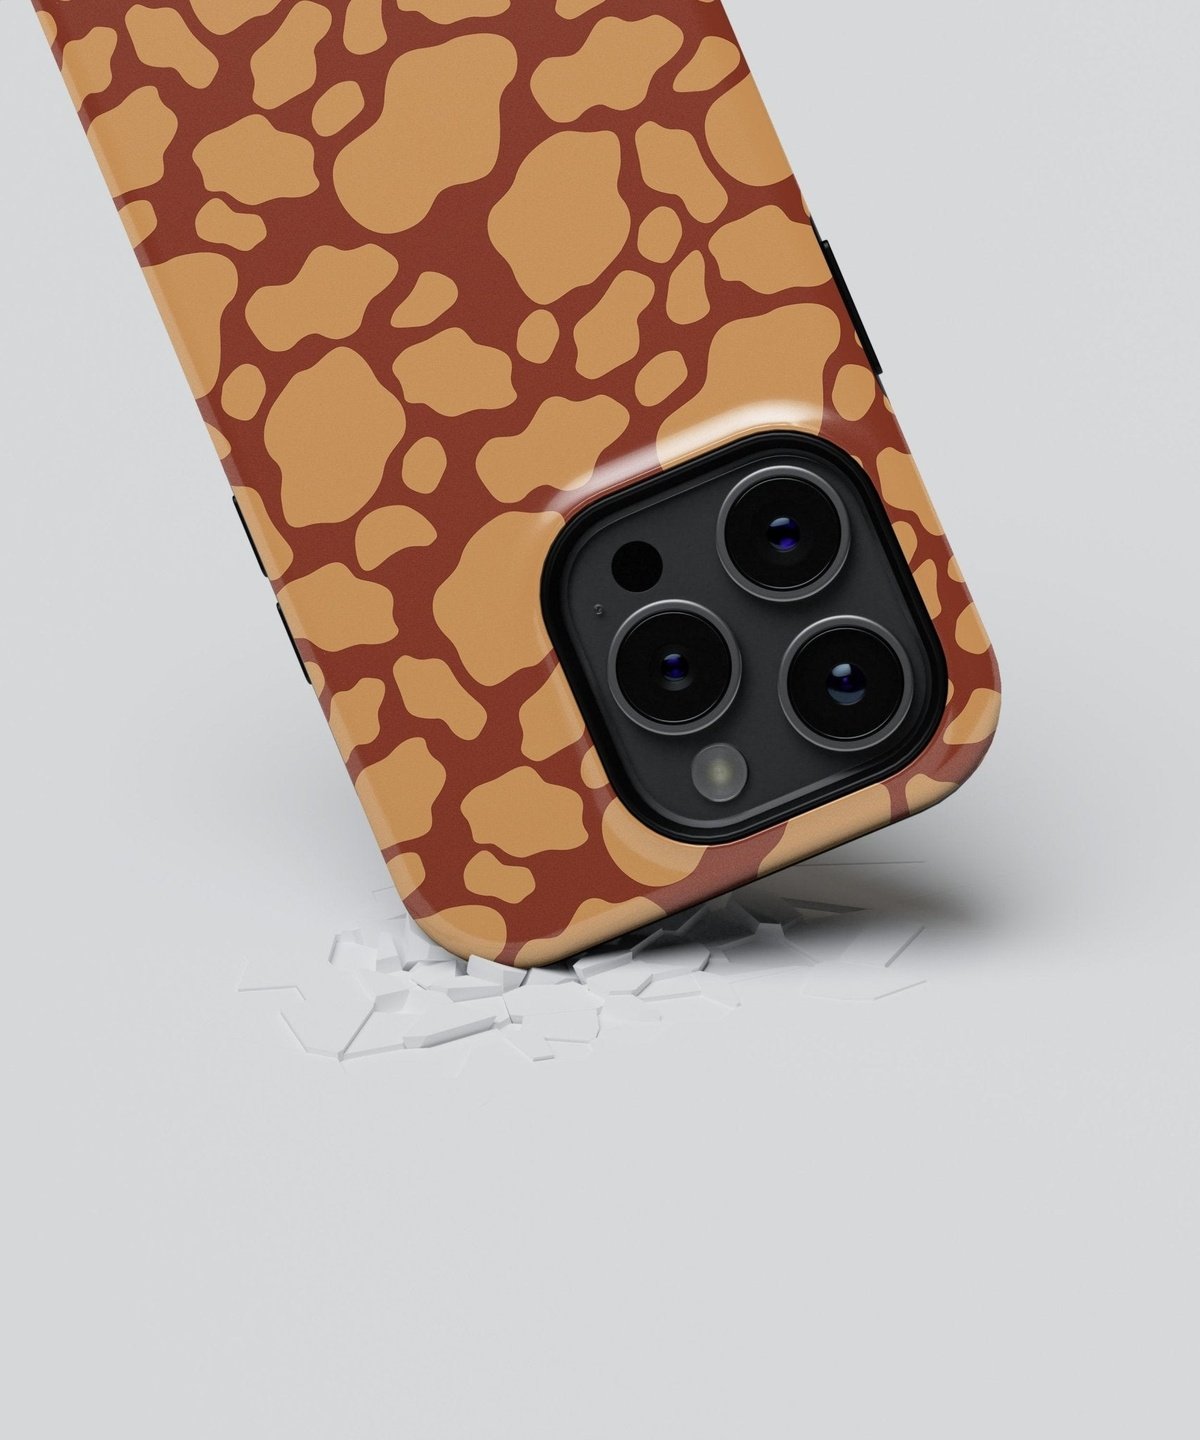 Biscuit Caramel Wave - iPhone Case